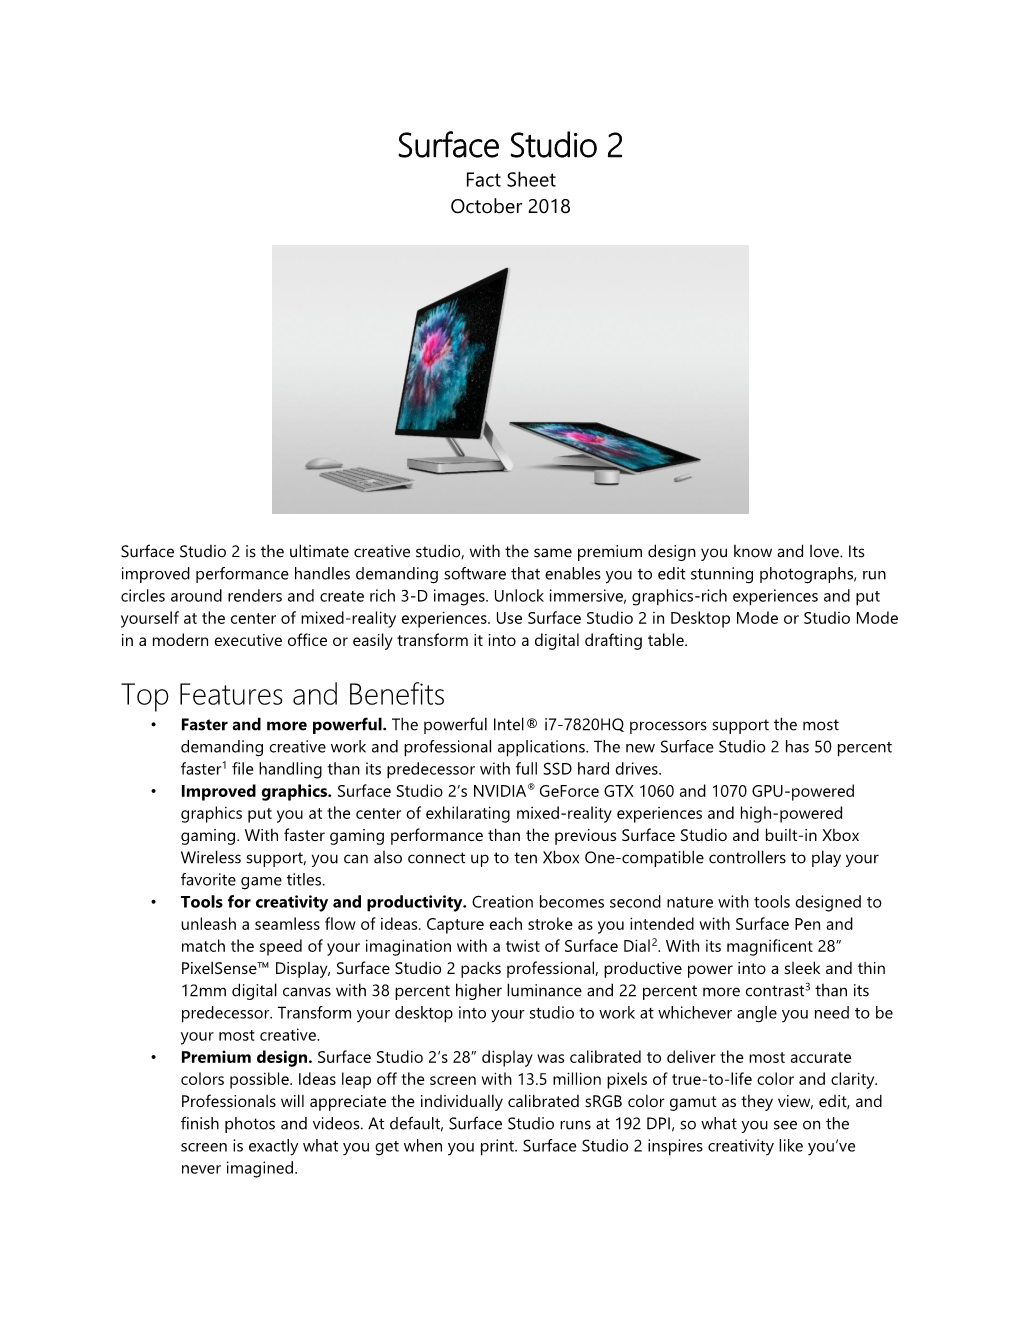 Microsoft Surface Studio 2 Fact Sheet